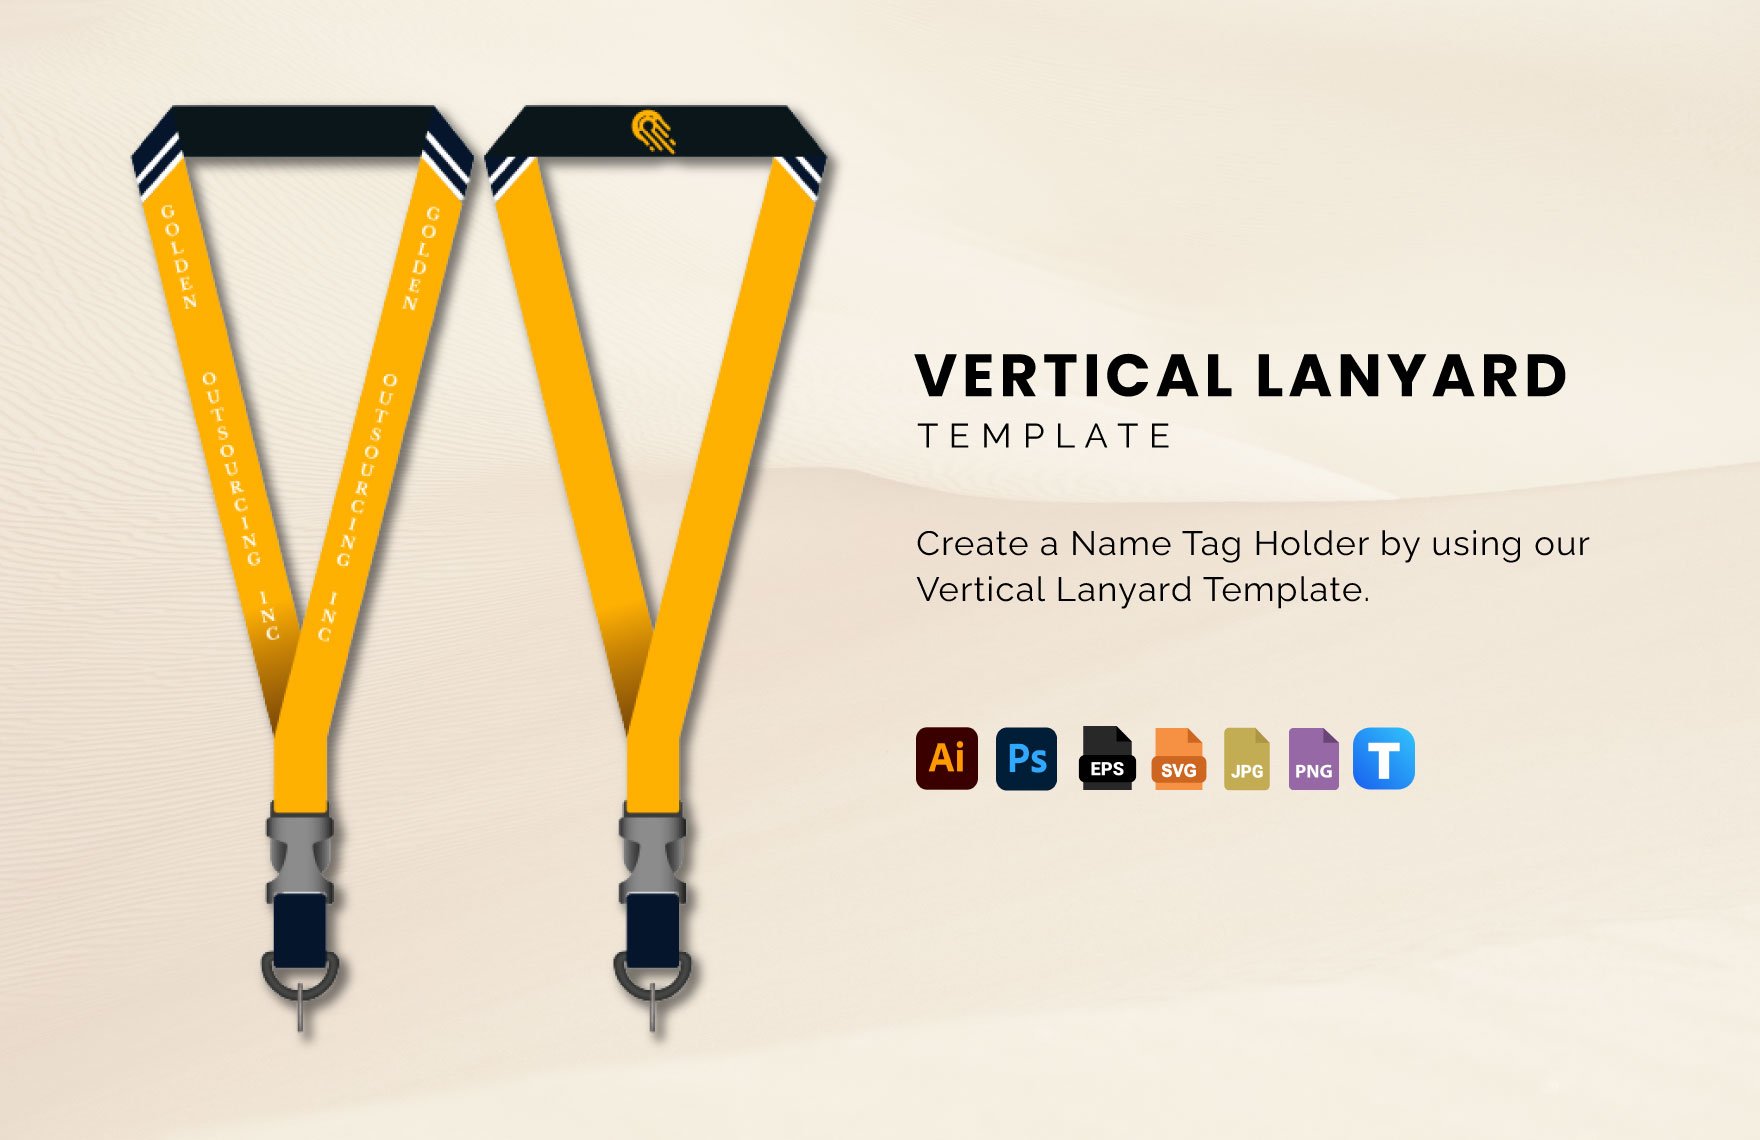 Free Vertical Lanyard Template in Illustrator, PSD, EPS, SVG, JPG, PNG